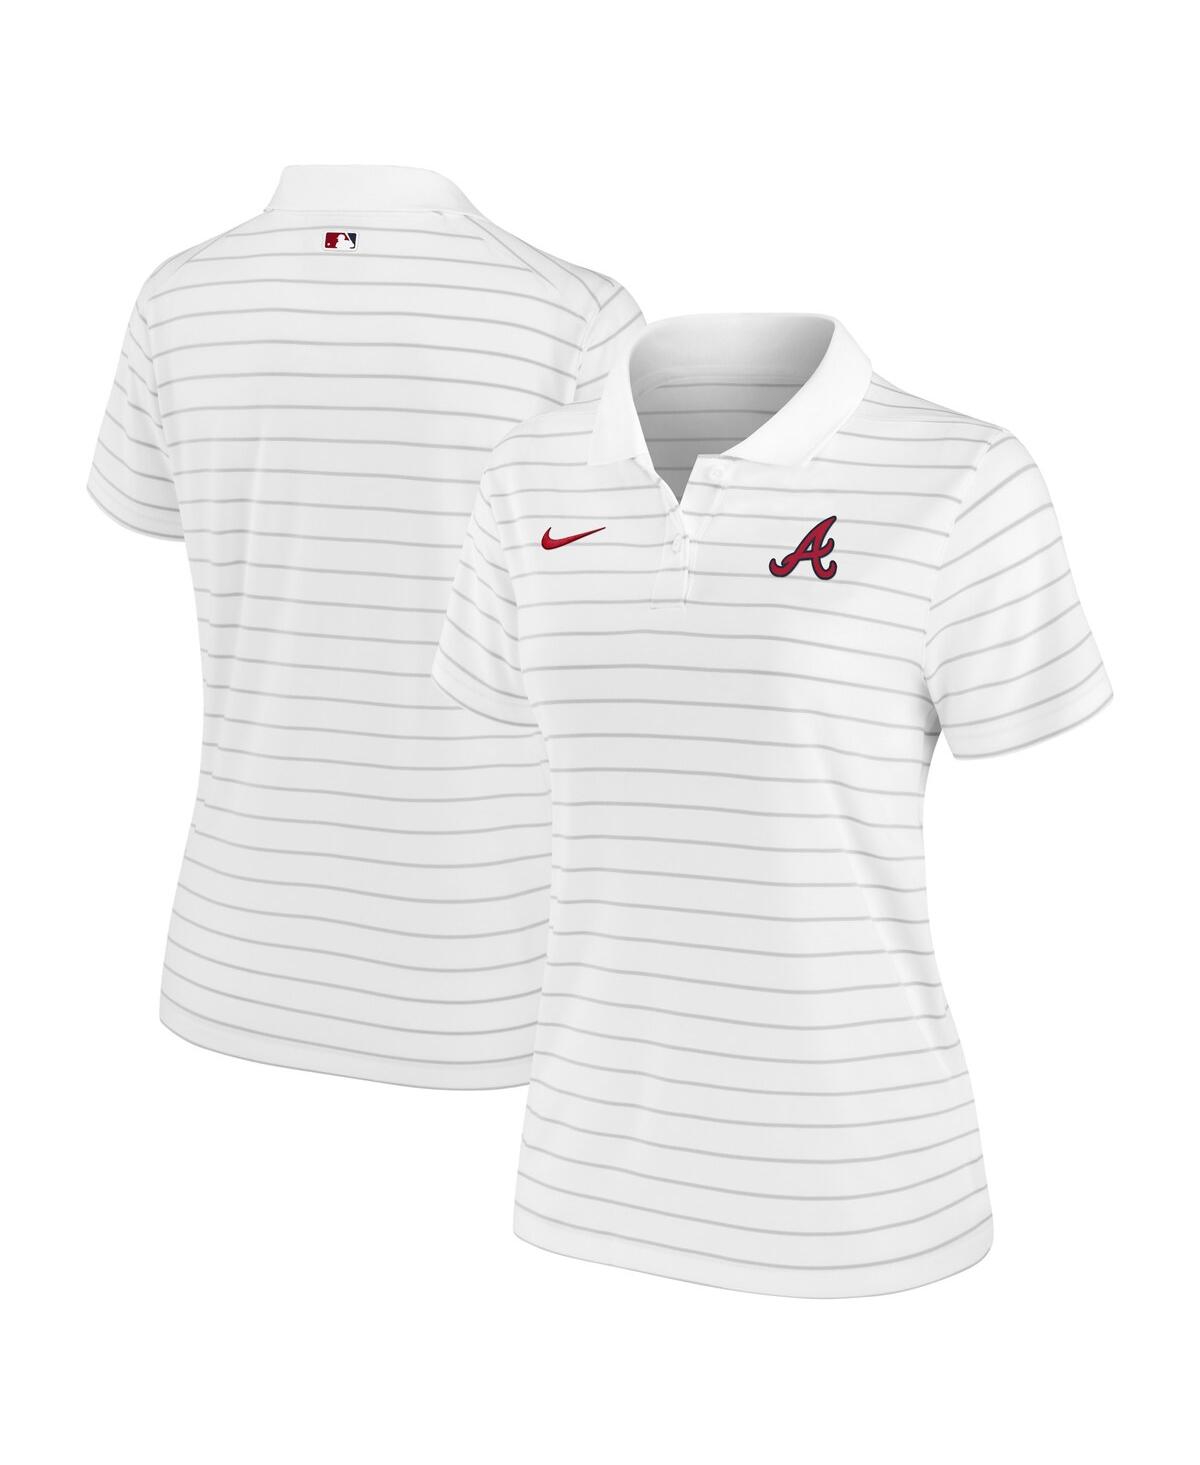 Women's Nike White Atlanta Braves Authentic Collection Victory Performance Polo Shirt - White